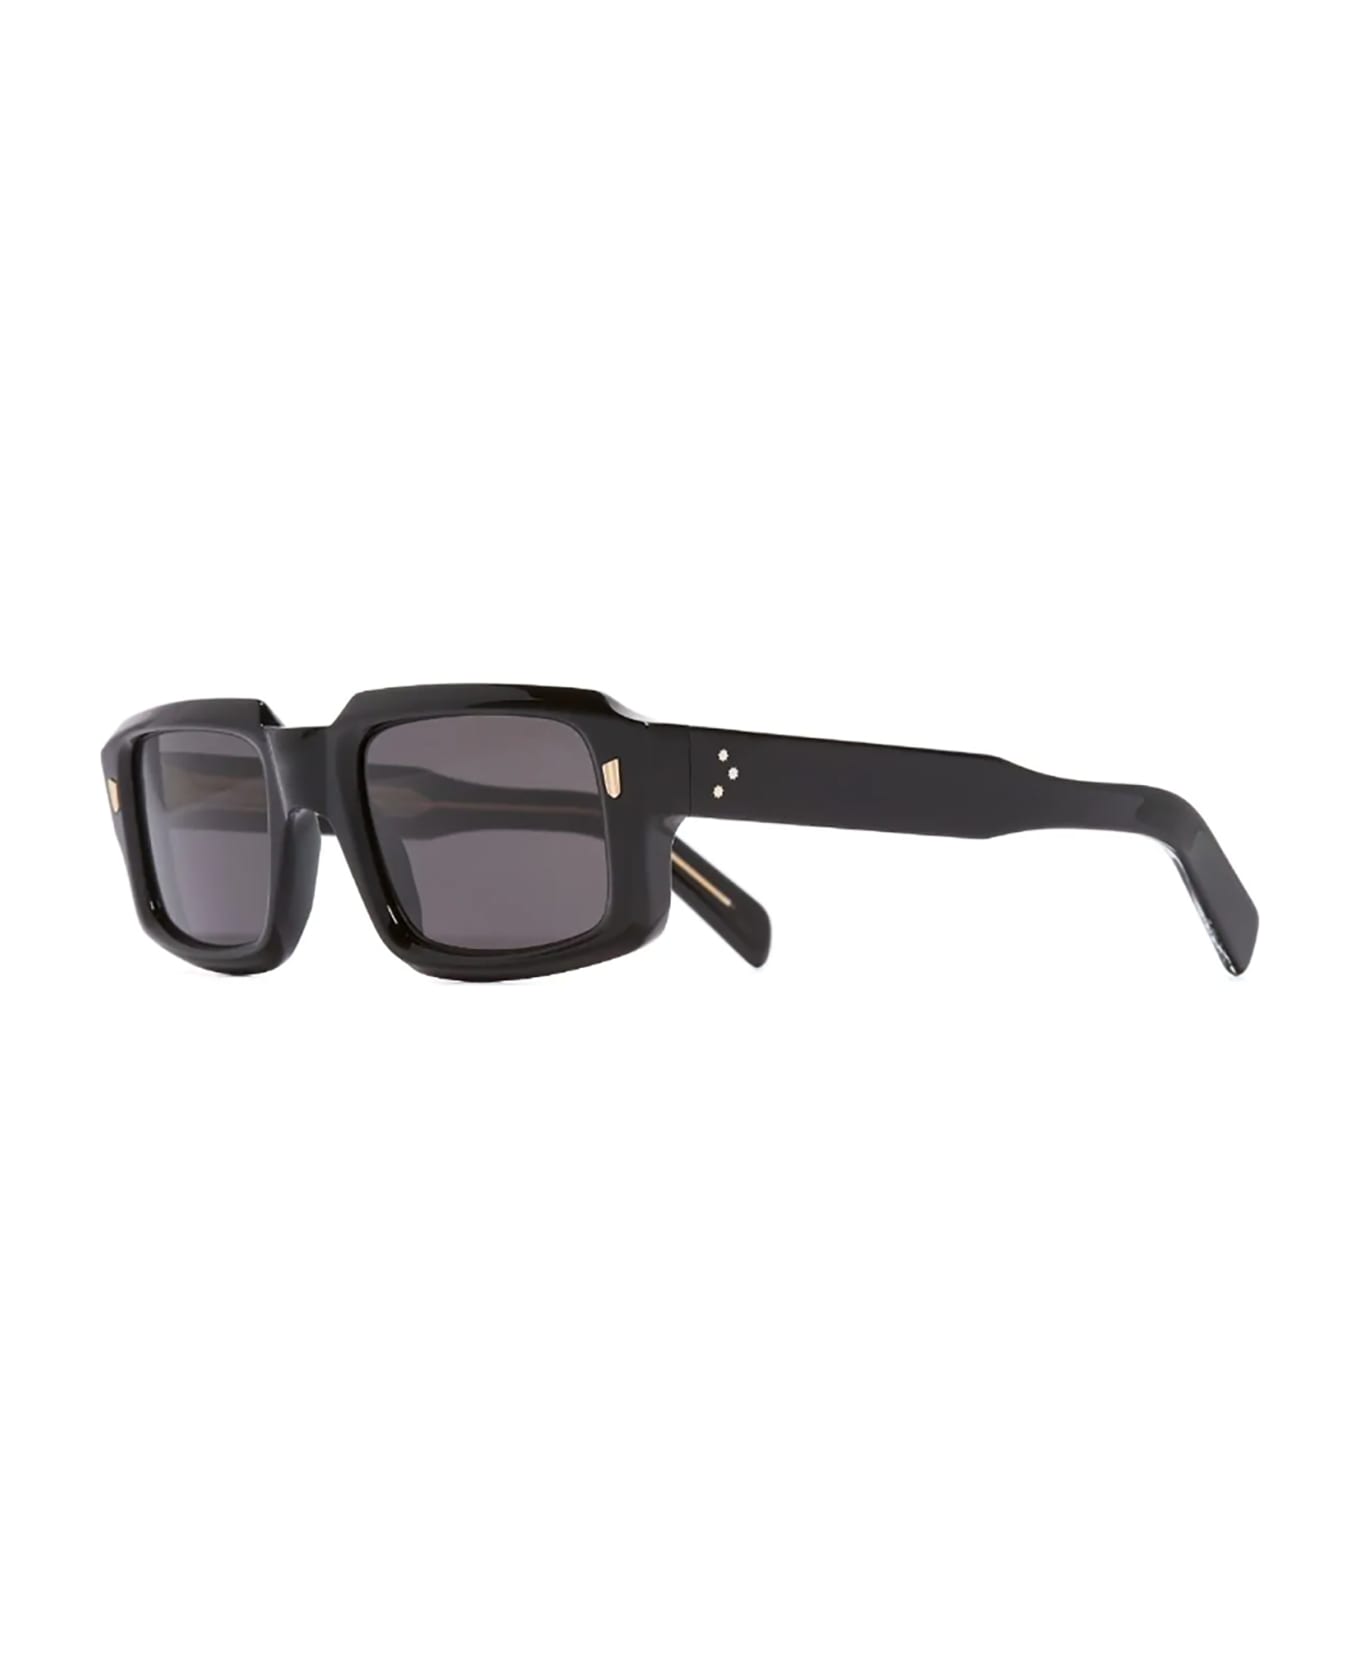 Cutler and Gross 9495 Sunglasses - Black